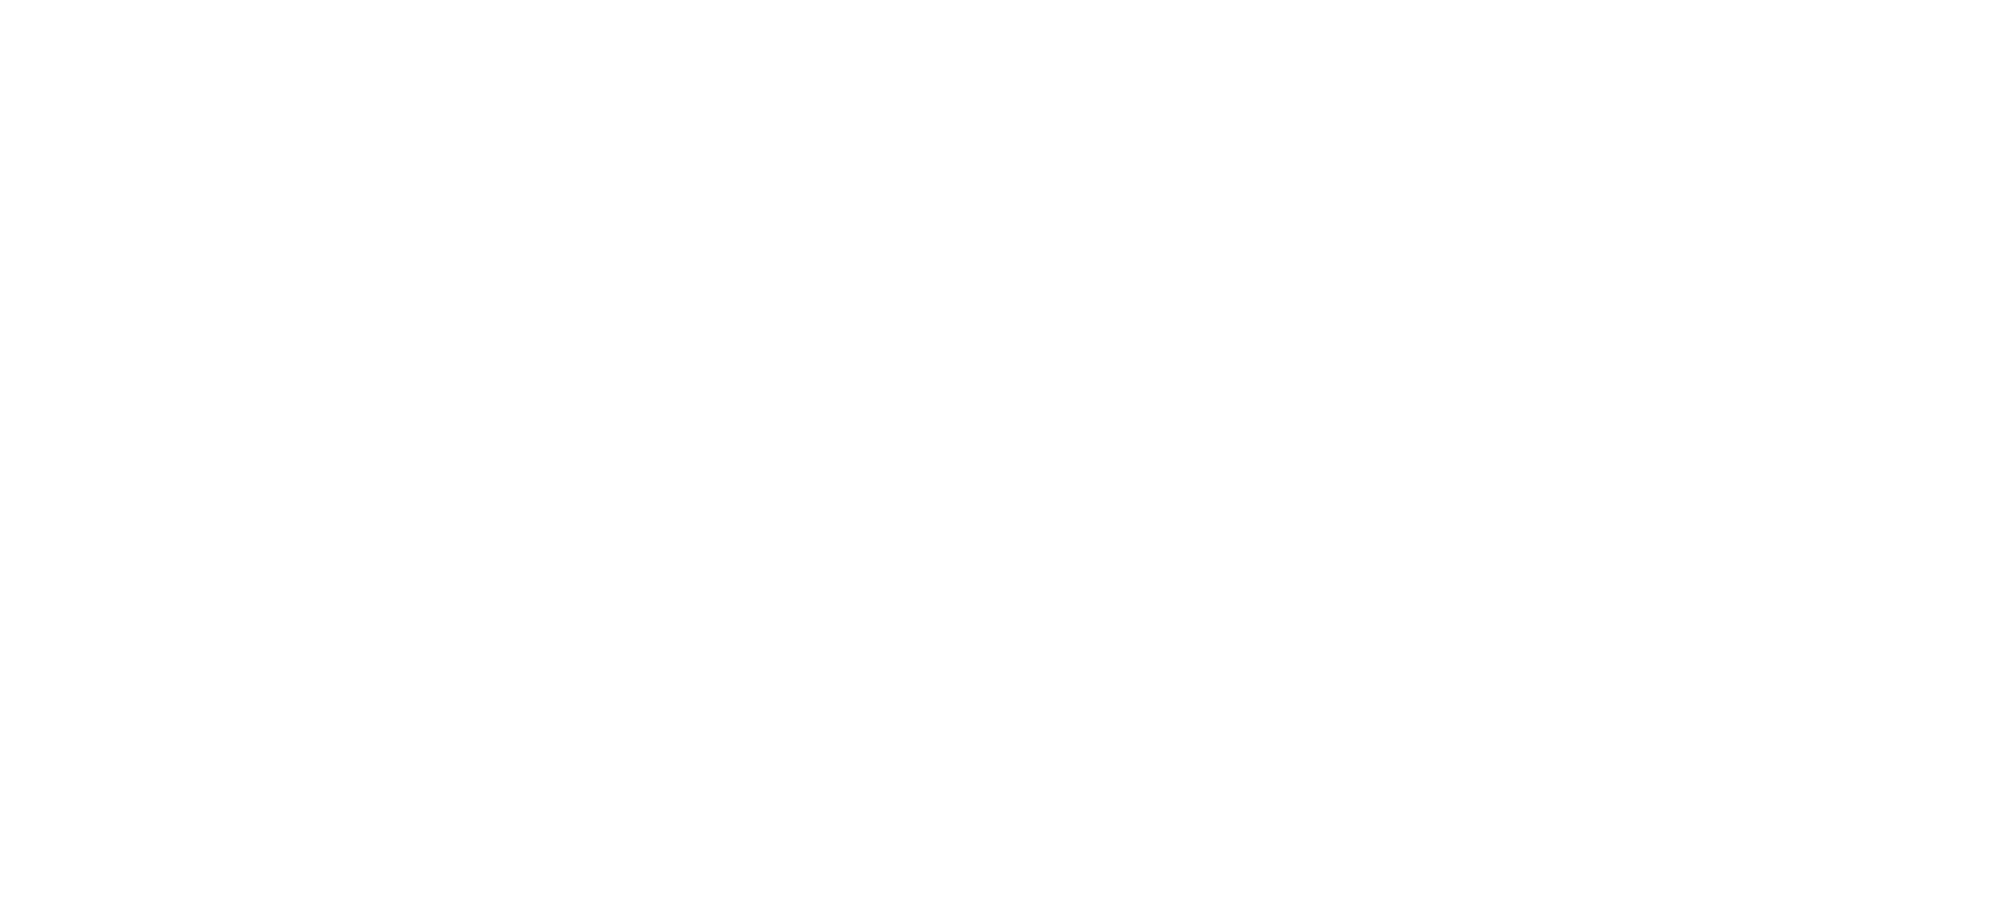 senior tripper